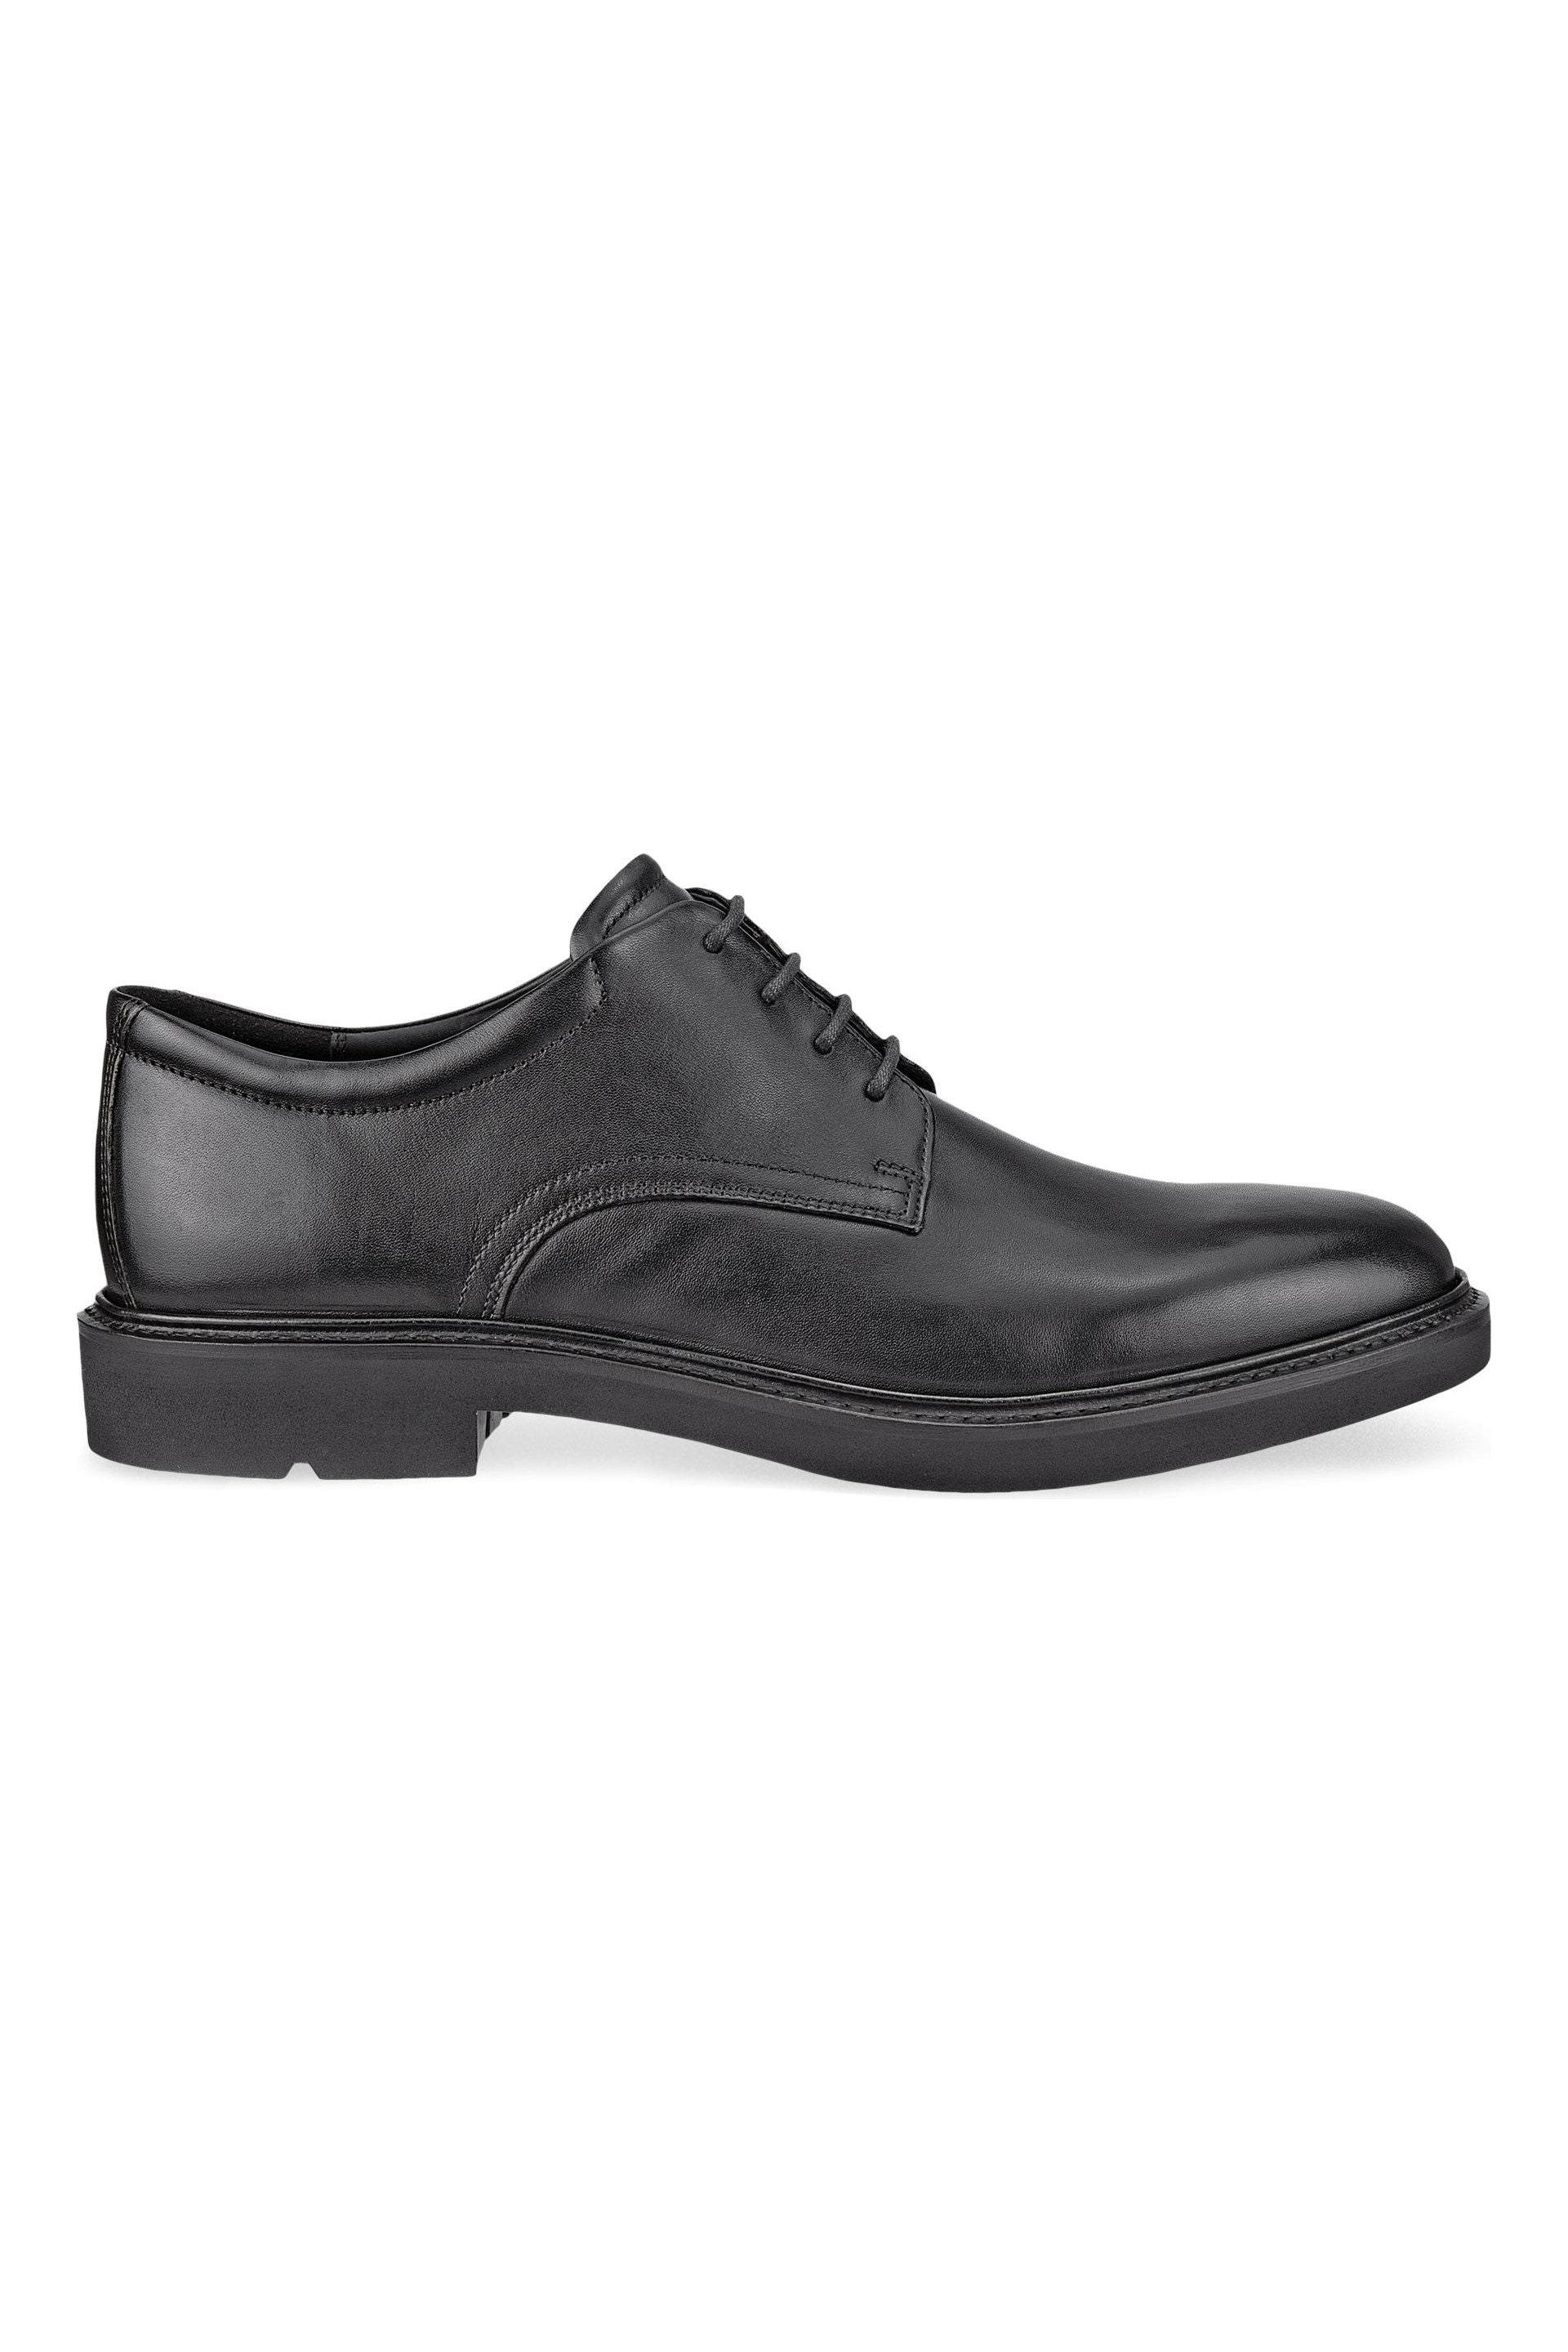 Ecco 525604-01001 Black leather smart shoe